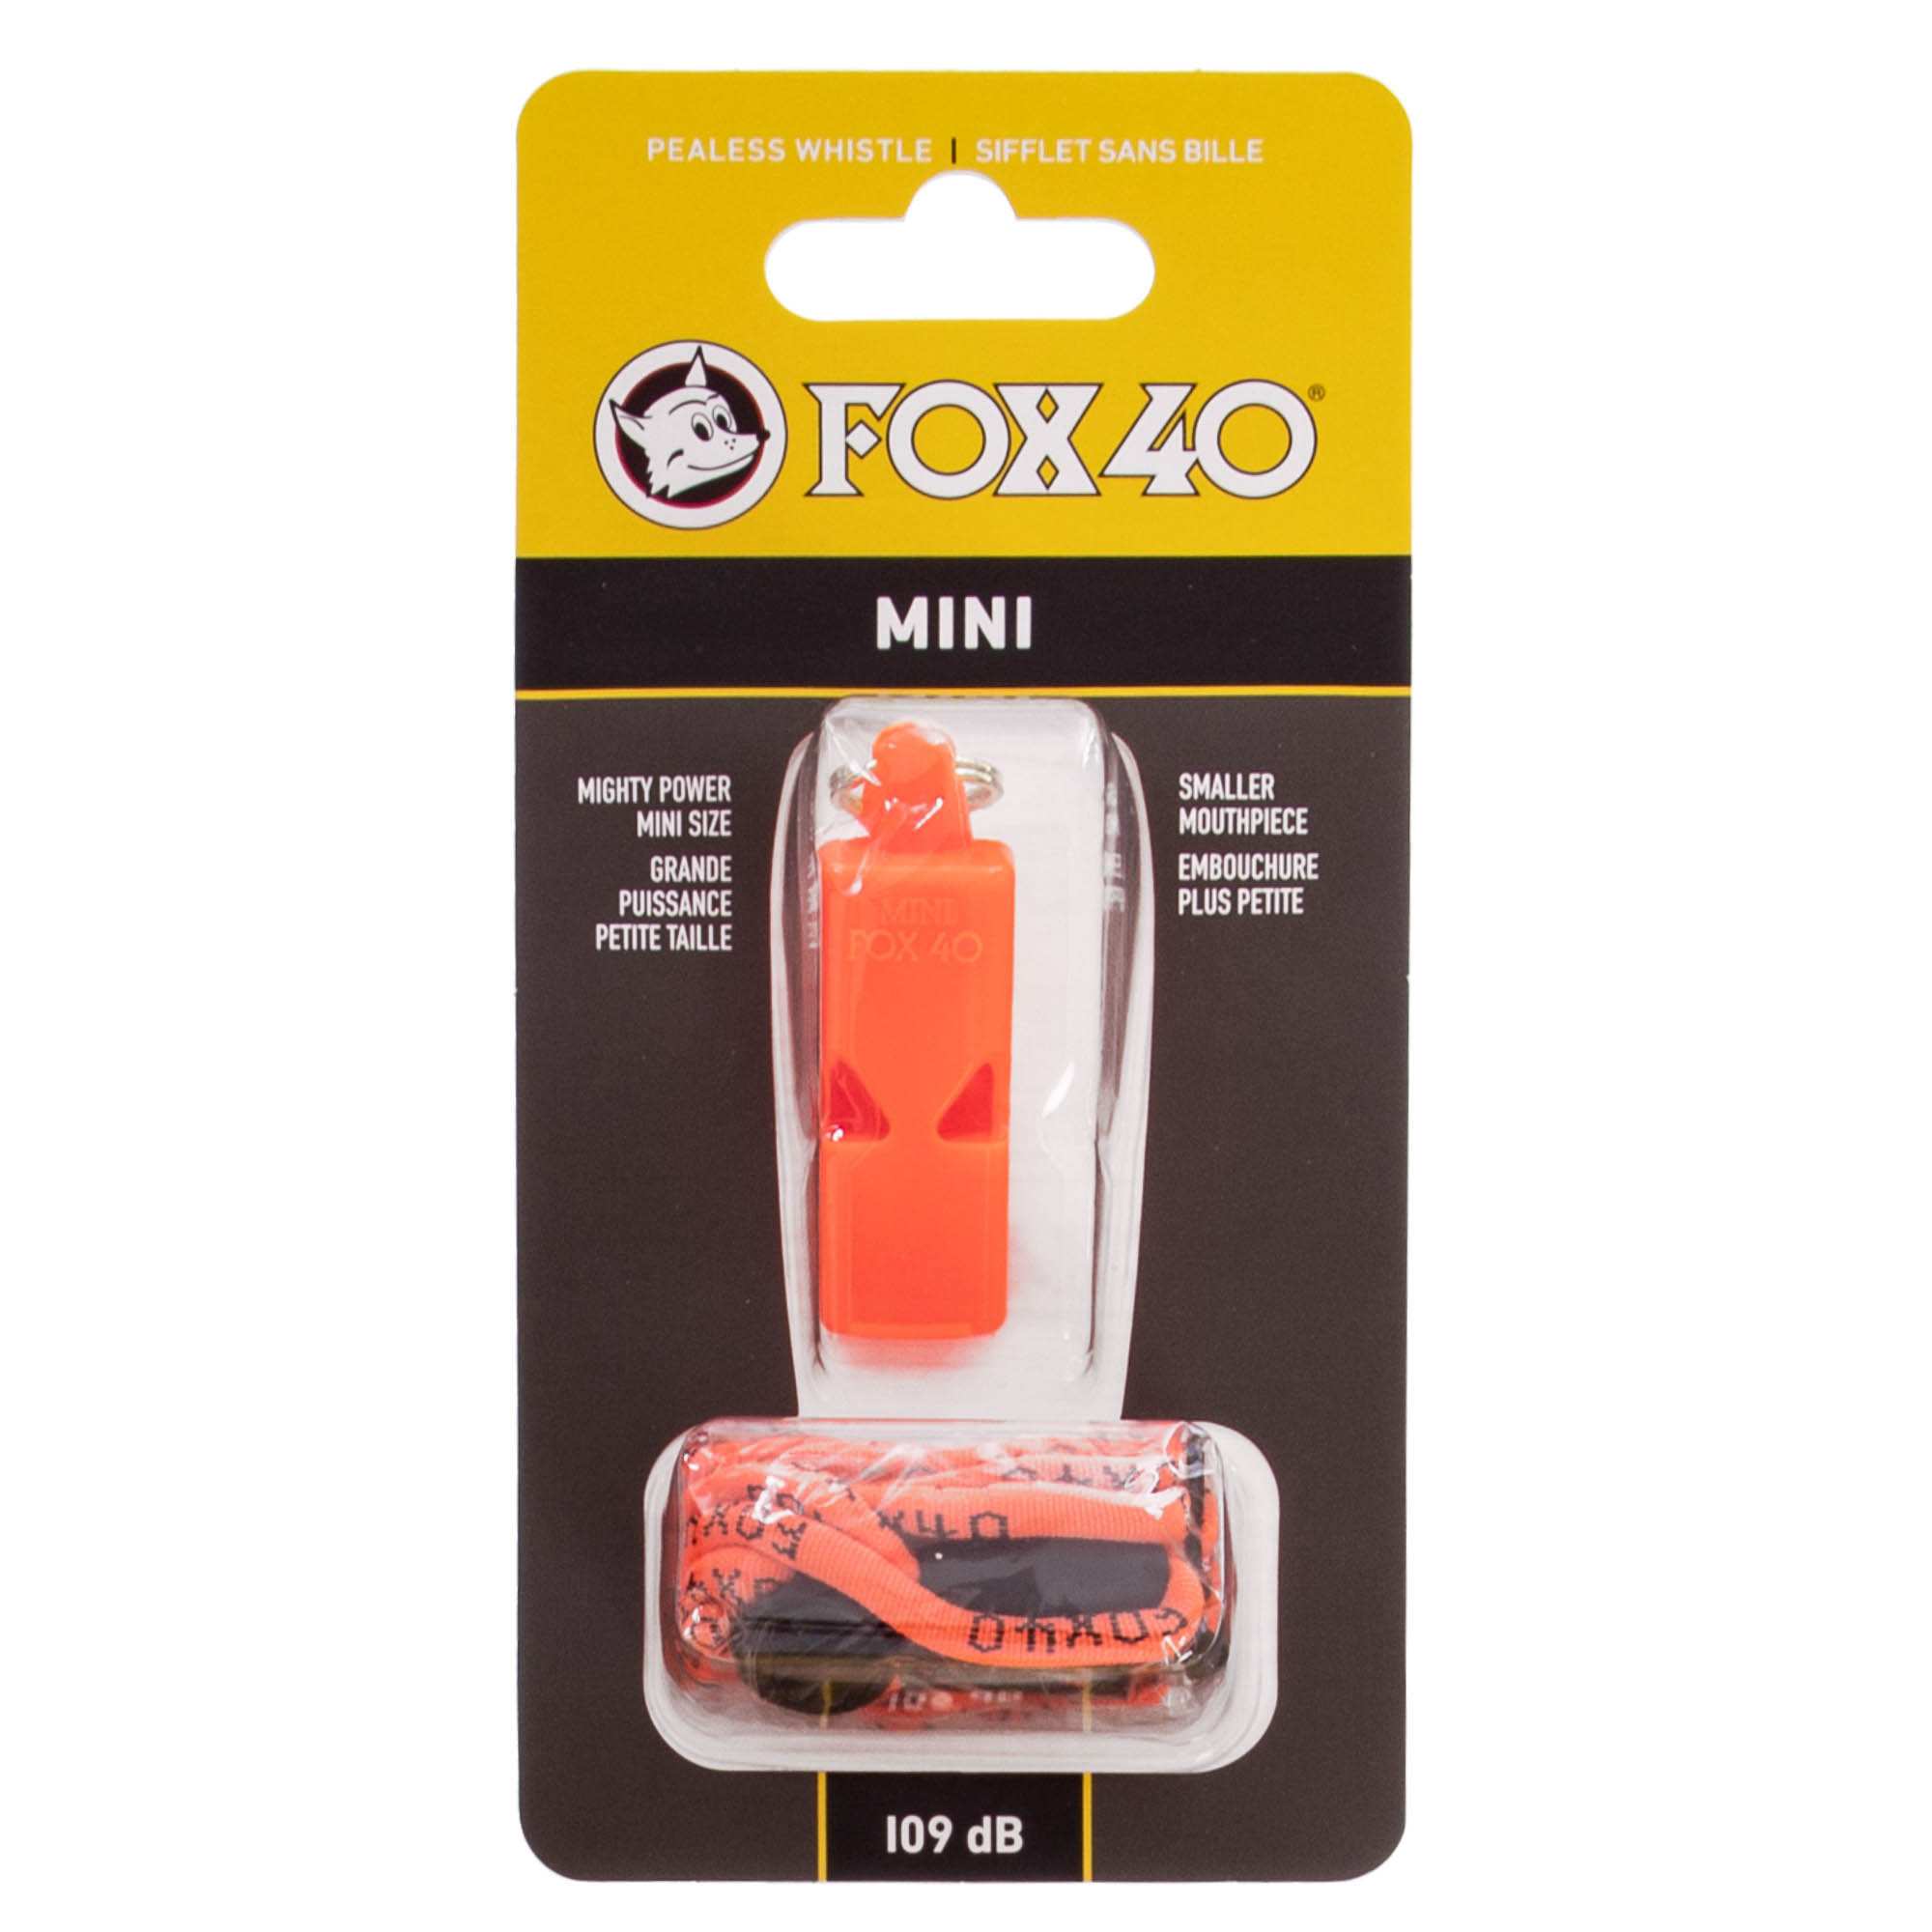 Свисток судейский пластиковый FOX40-MINI Оранжевый